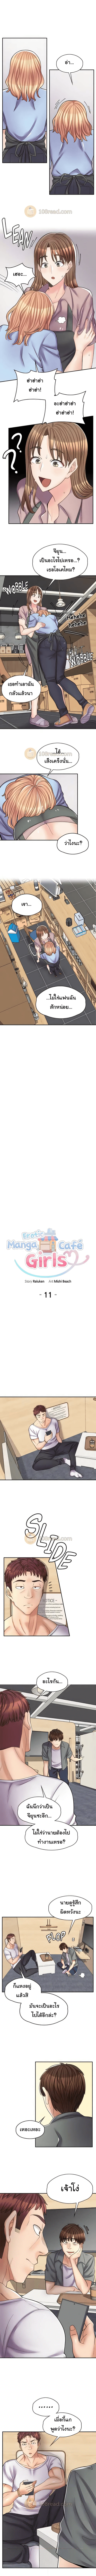 Erotic Manga Café Girls 11 (1)